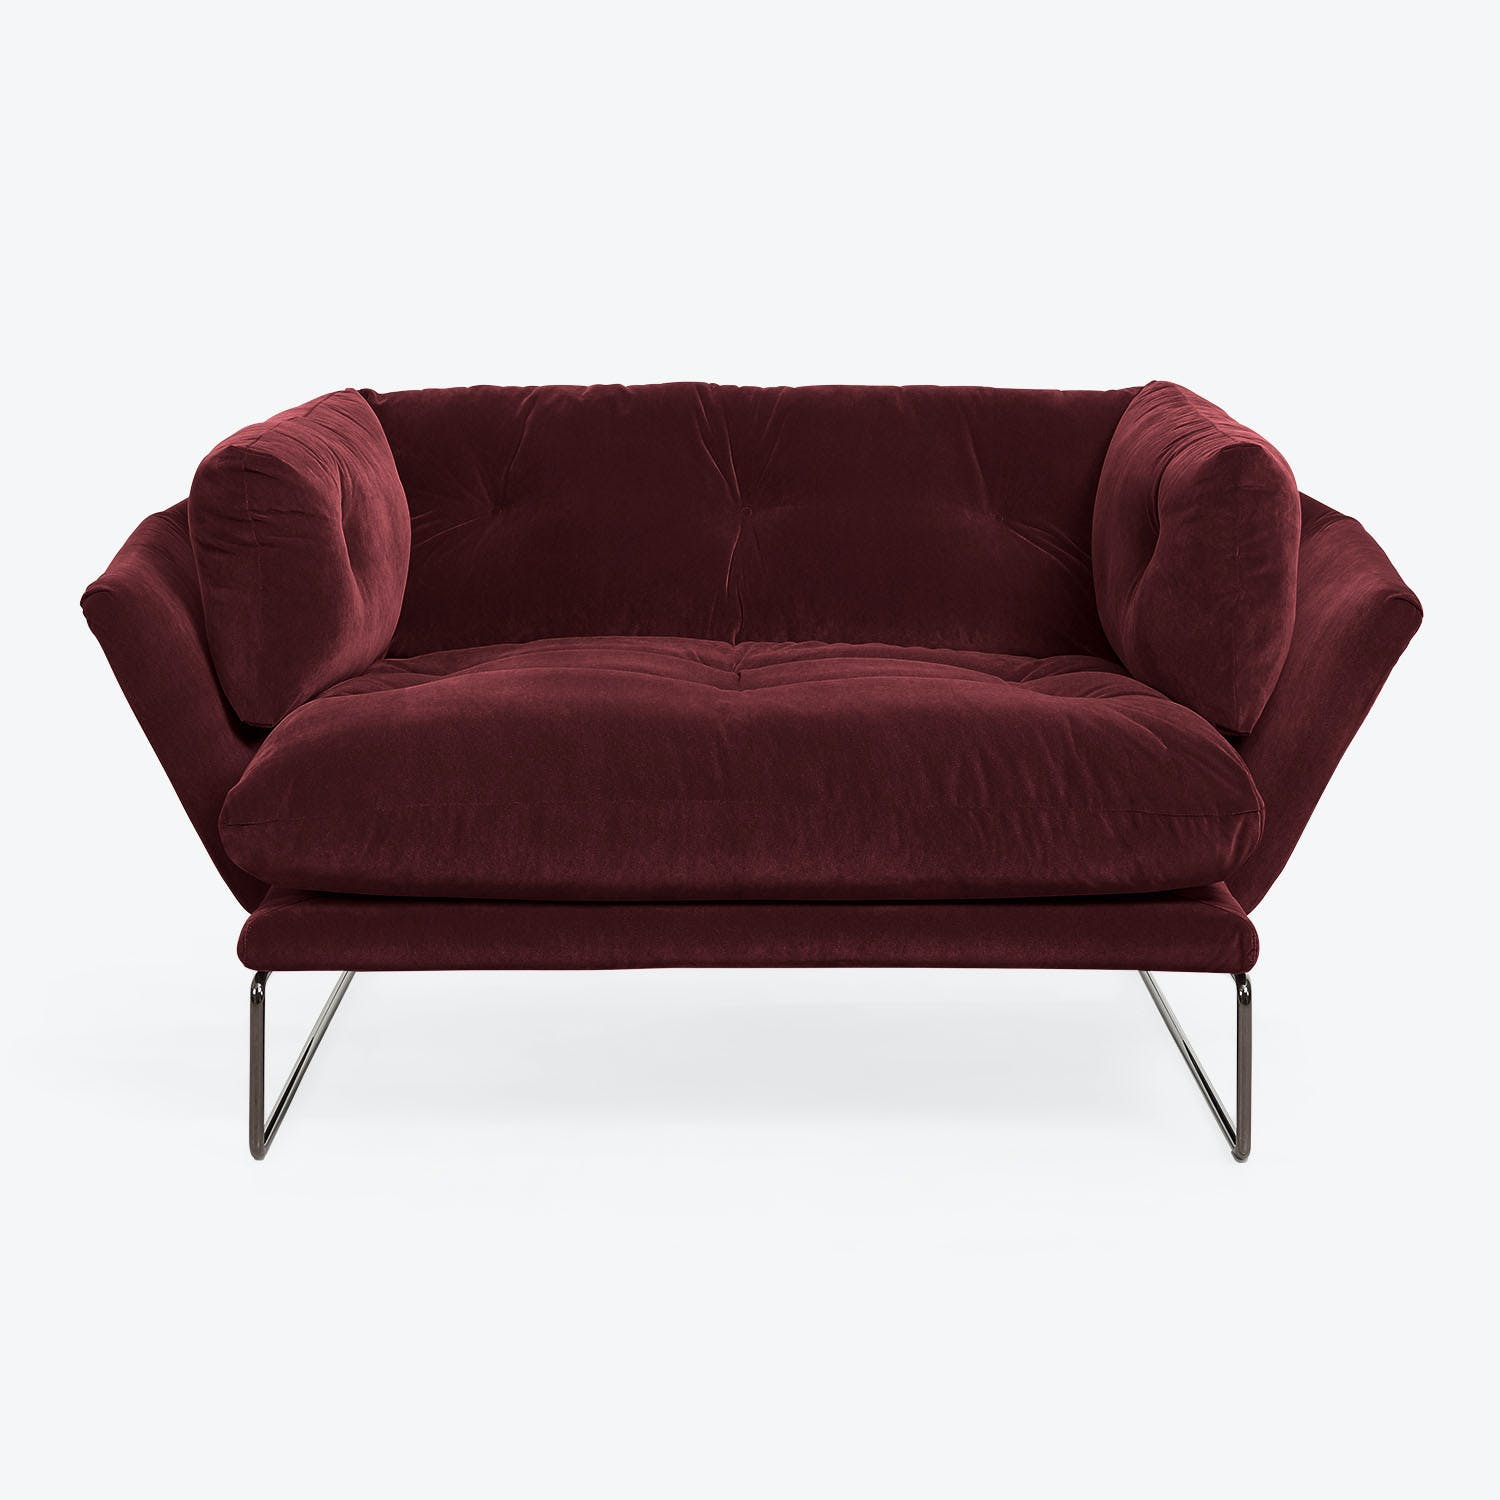 Modern burgundy velvet sofa with plush cushioning and sleek frame.